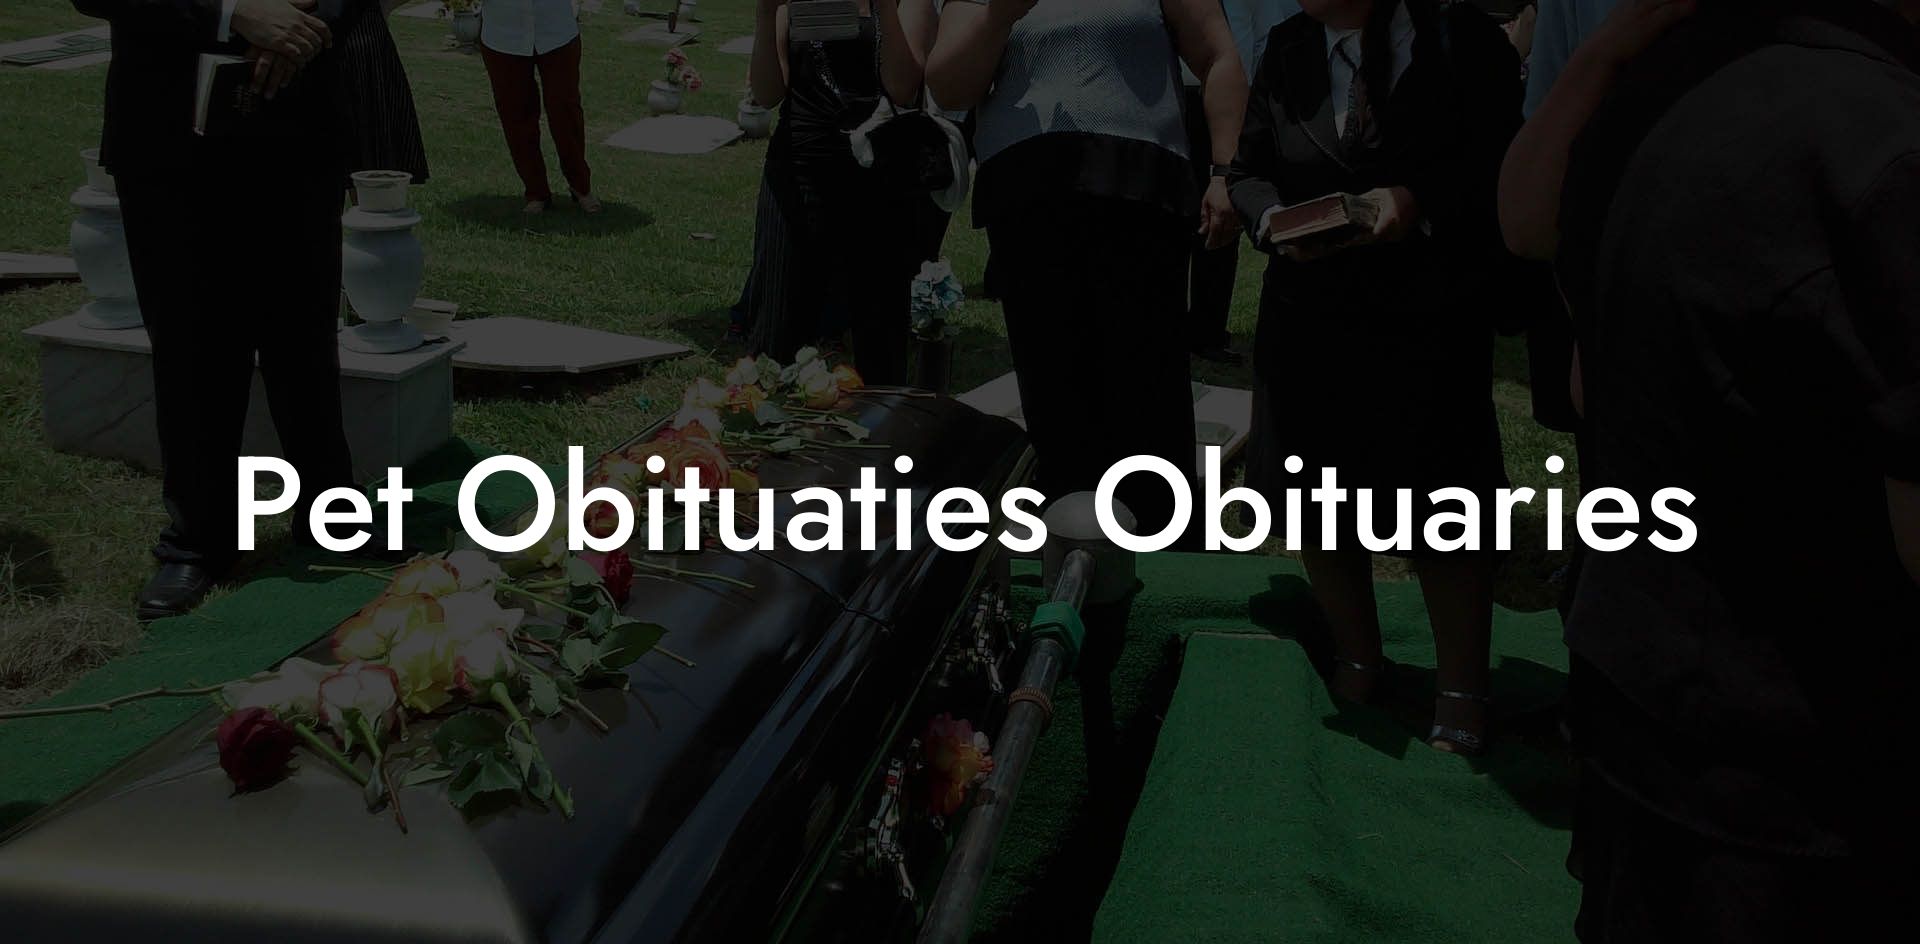 Pet Obituaties Obituaries